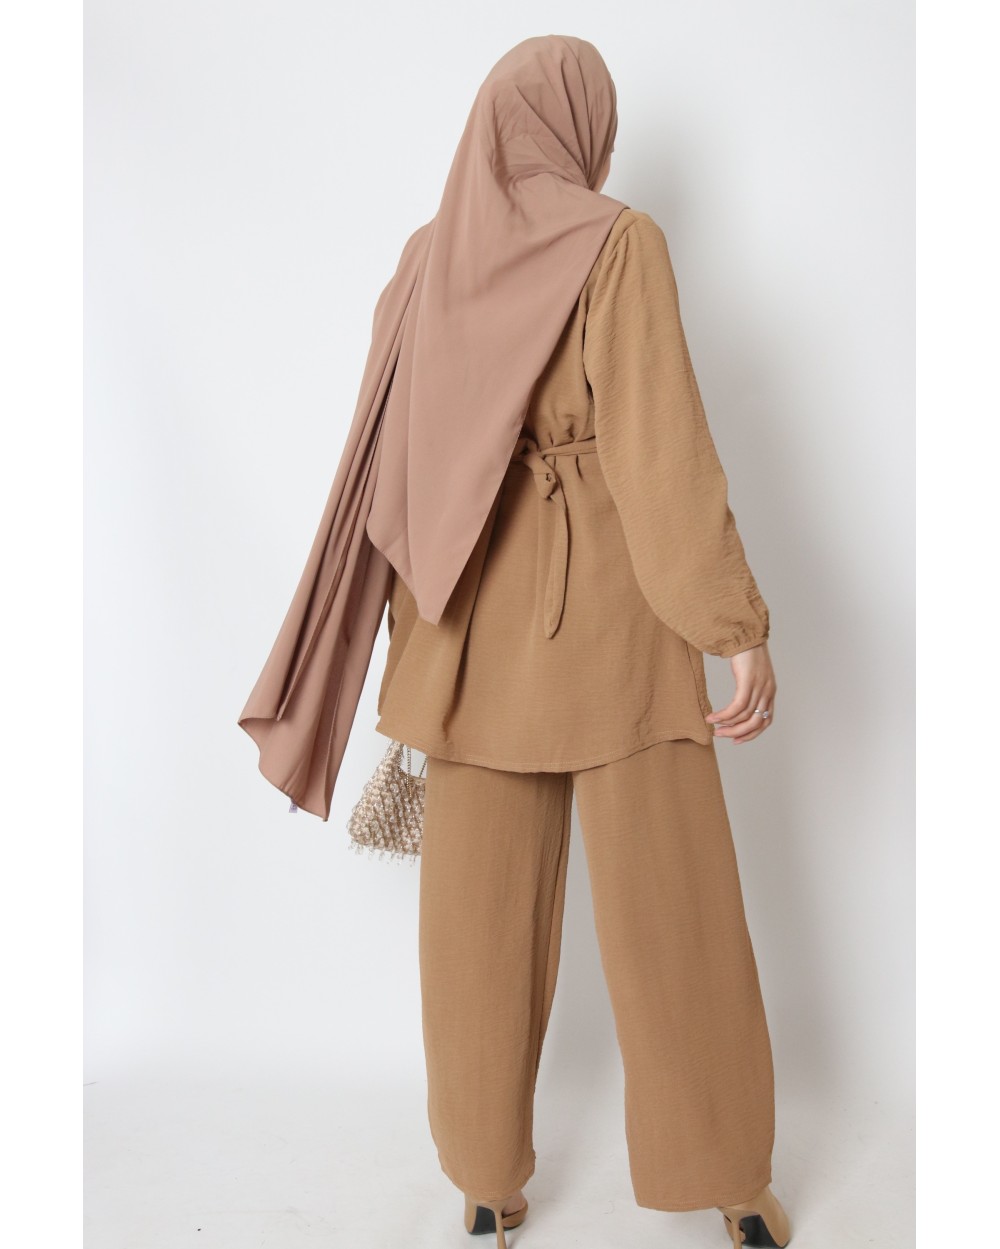 ensemble musulmane moderne,ensemble modest fashion.ensemble mastour -  Neyssa Boutique